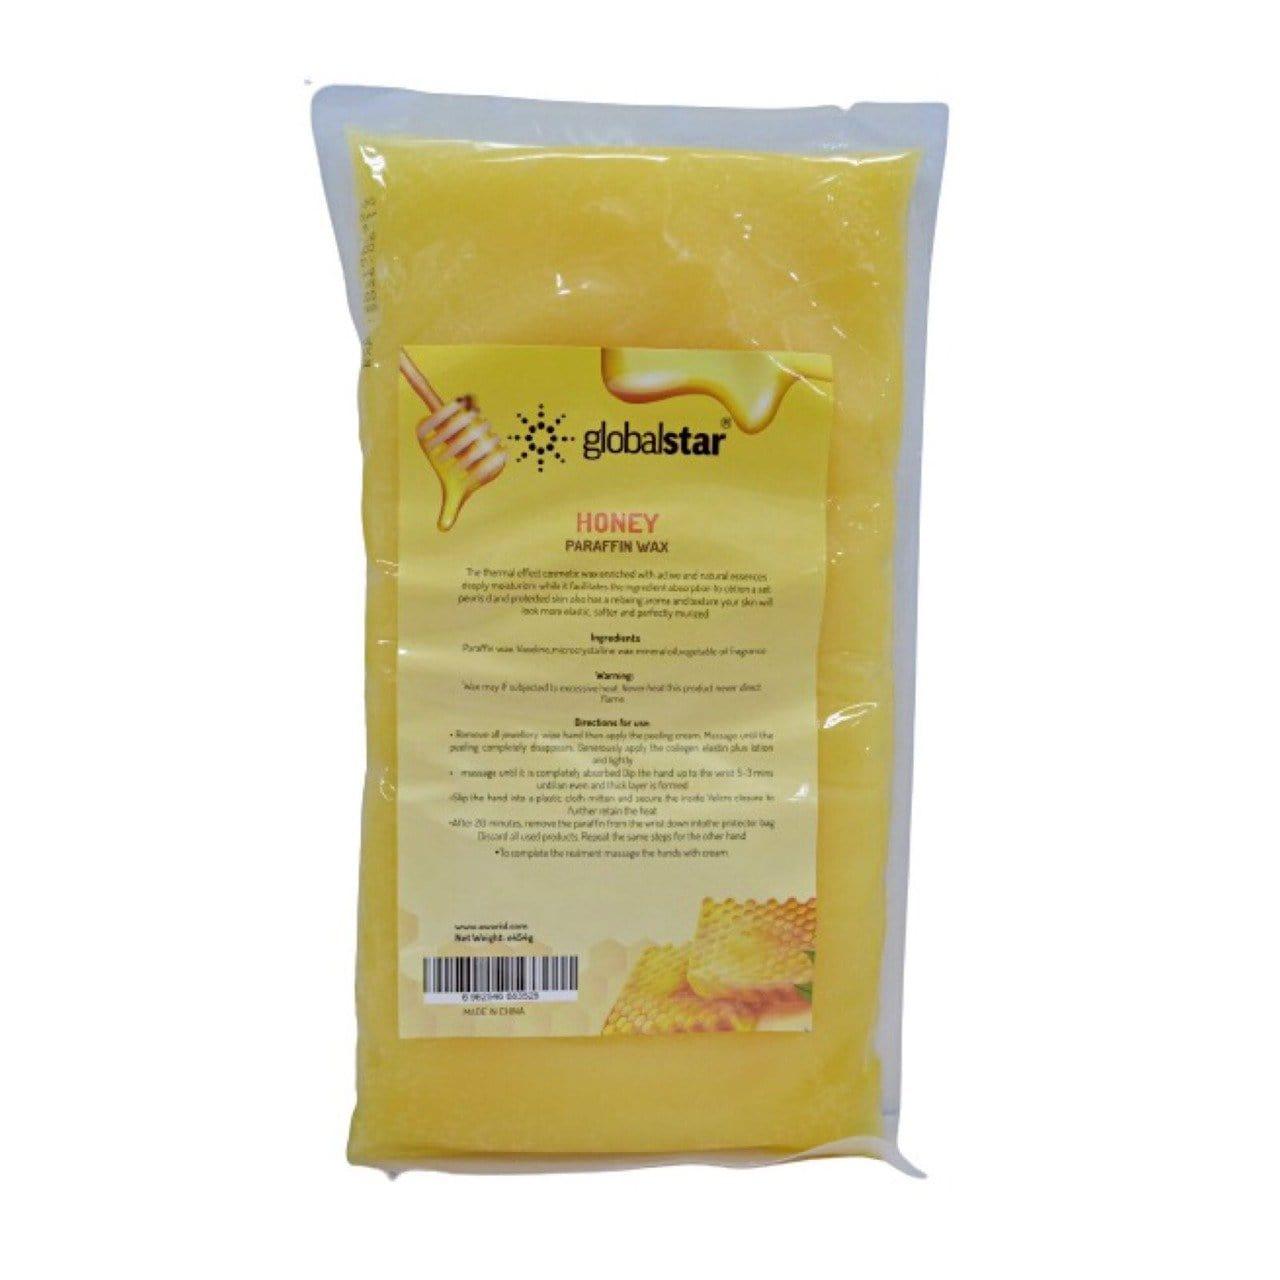 Globalstar Paraffin Wax Honey 454g - Awarid UAE